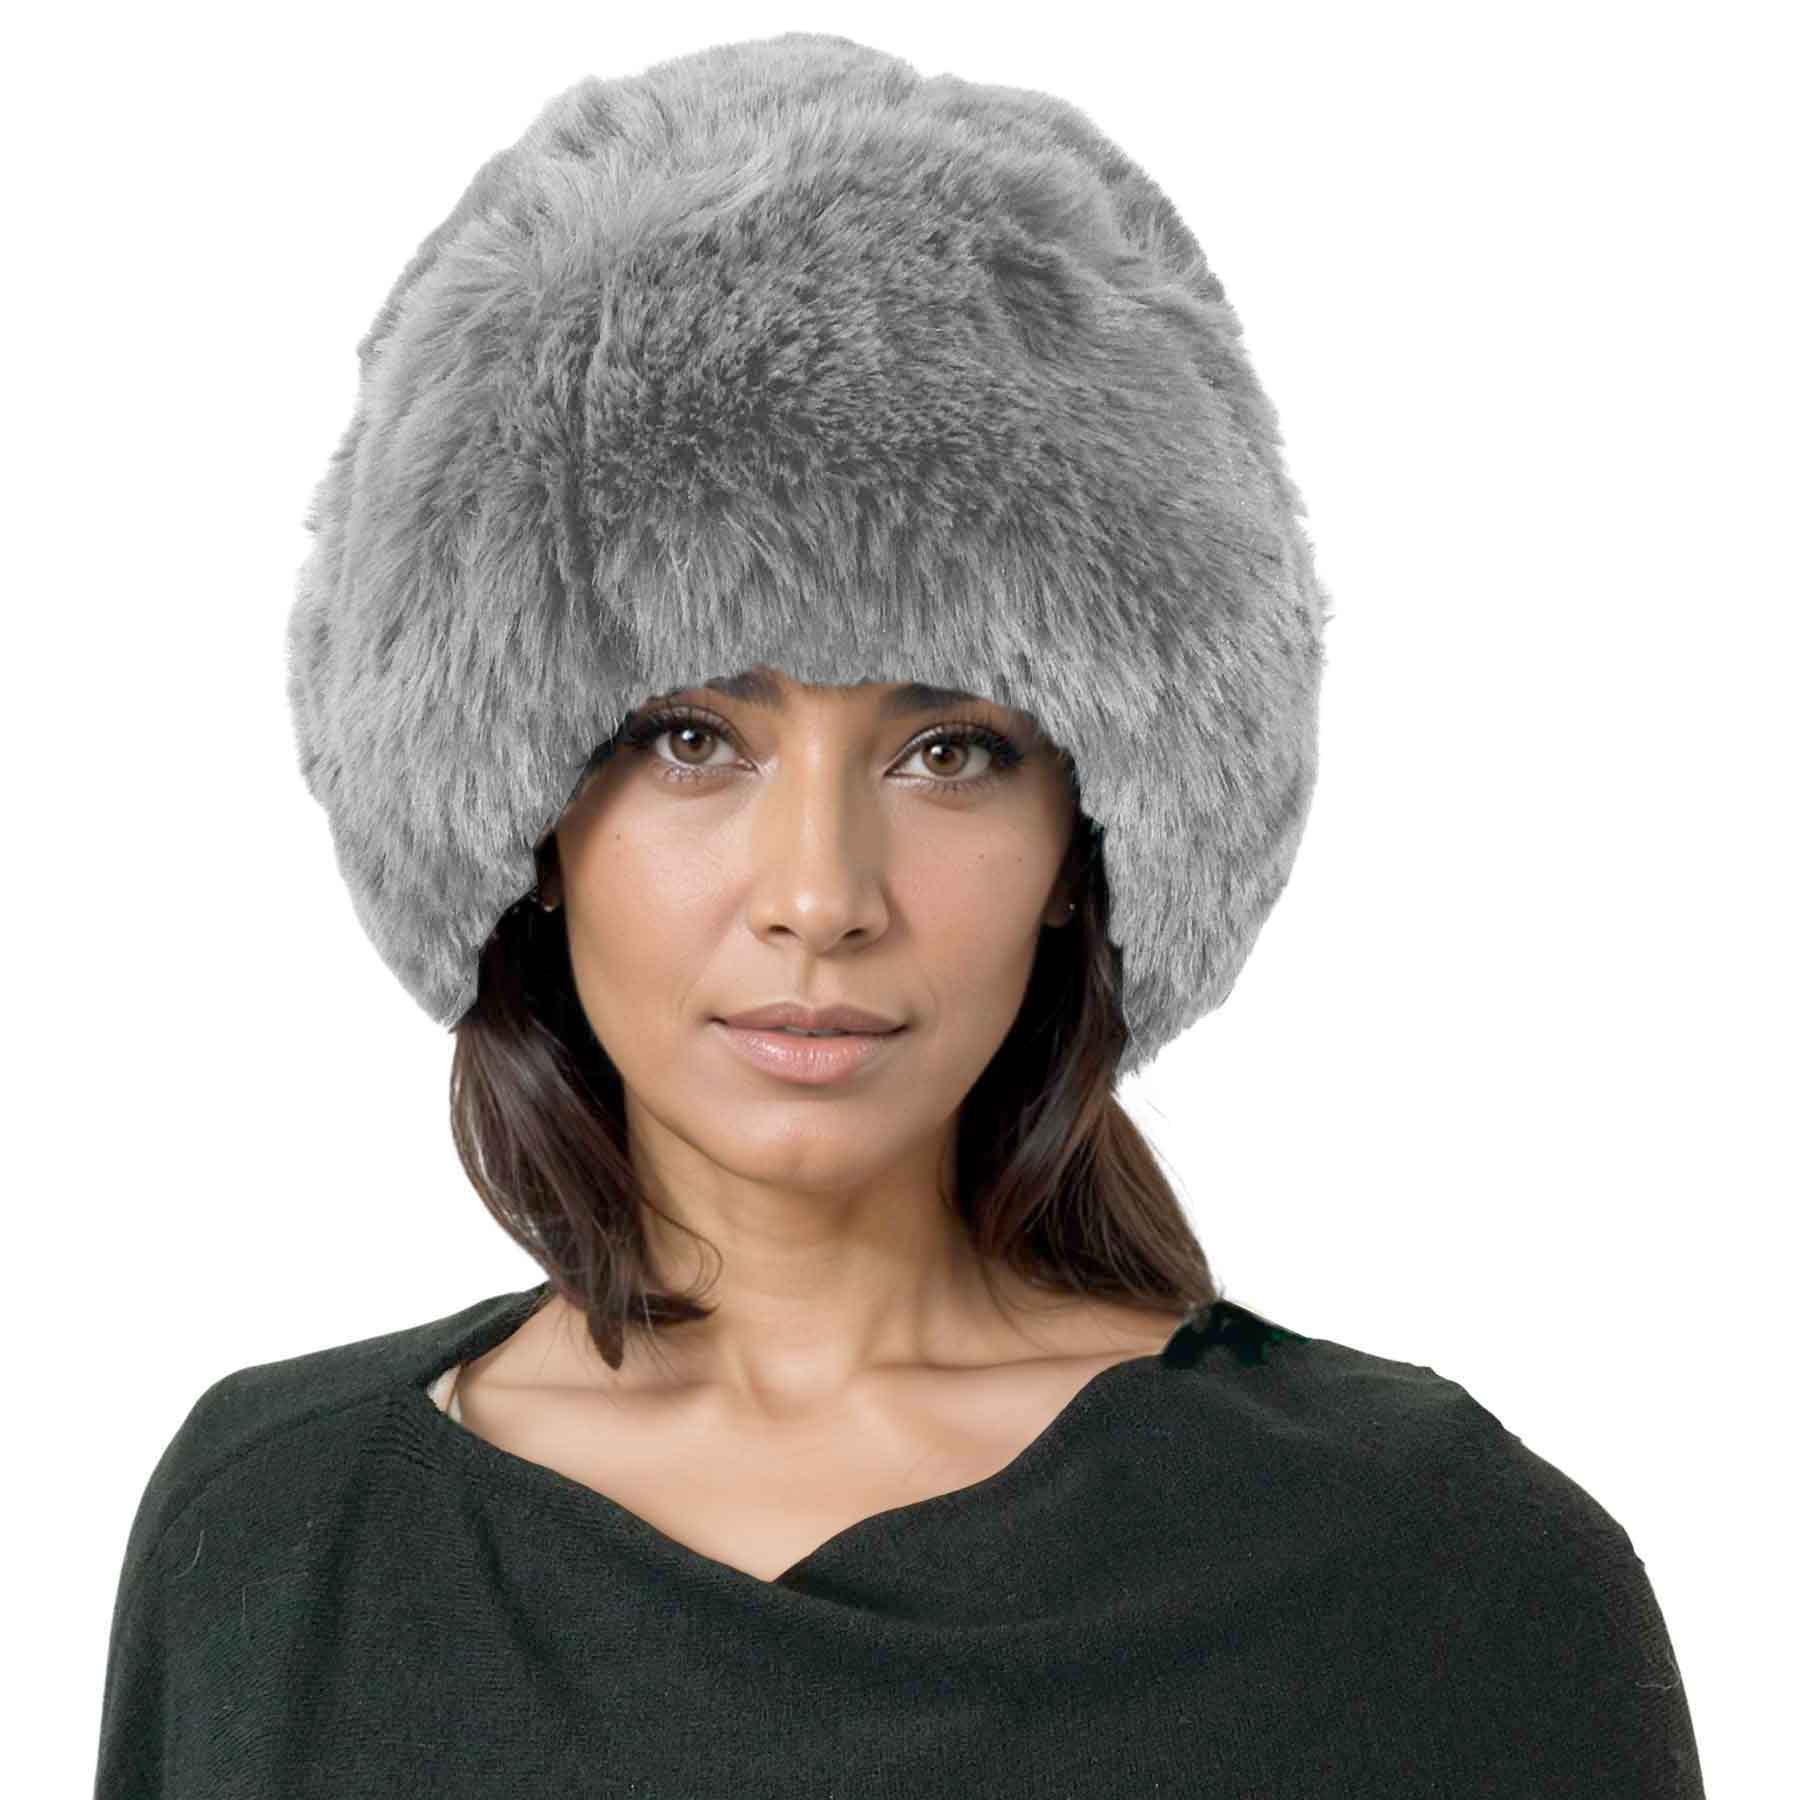 Light Grey<br>
Faux Rabbit Cossack Hat
